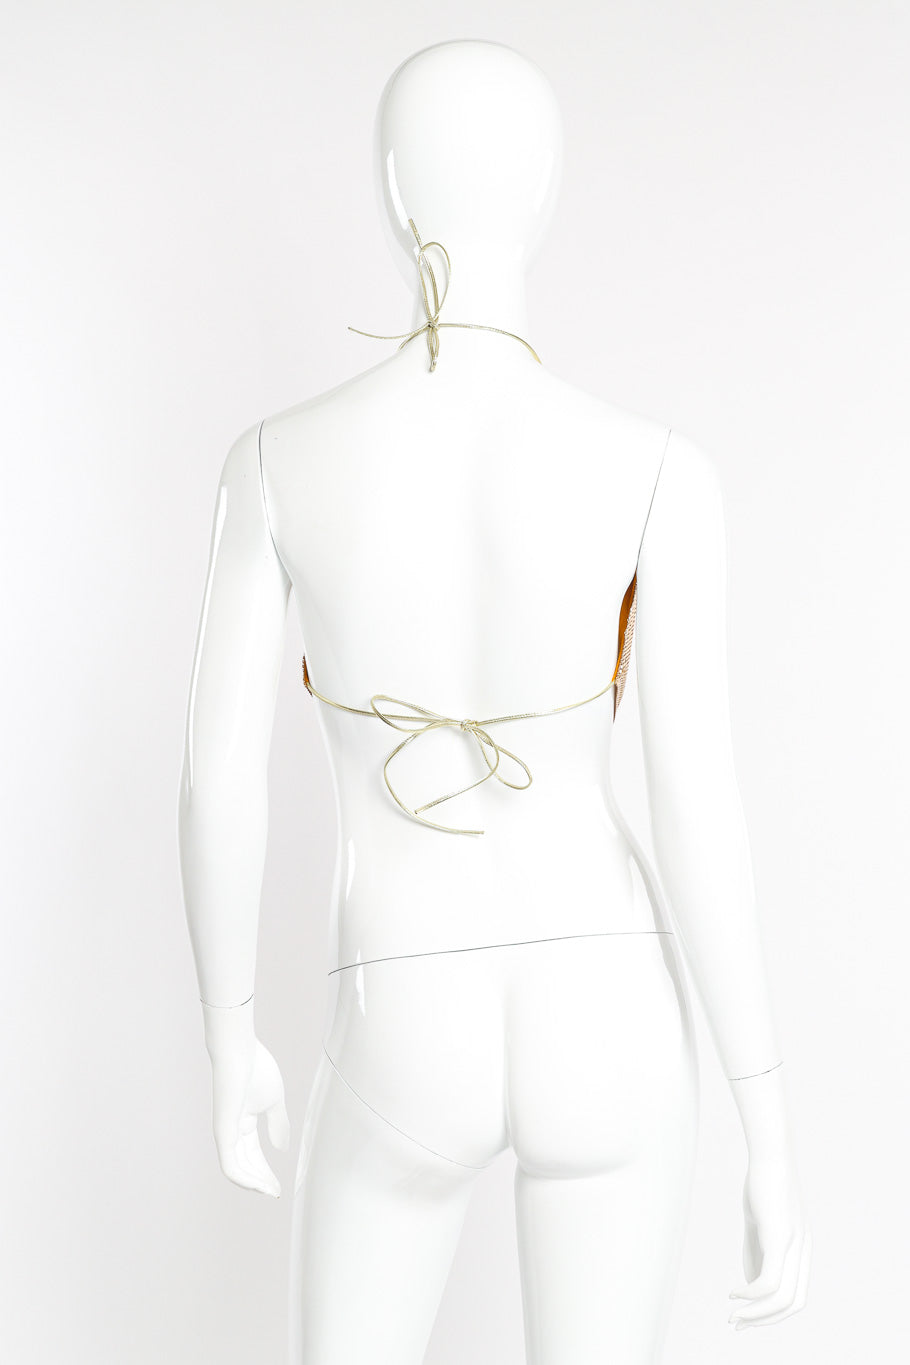 Vintage Whiting & Davis Gold Mesh Halter Top back view on mannequin @Recessla